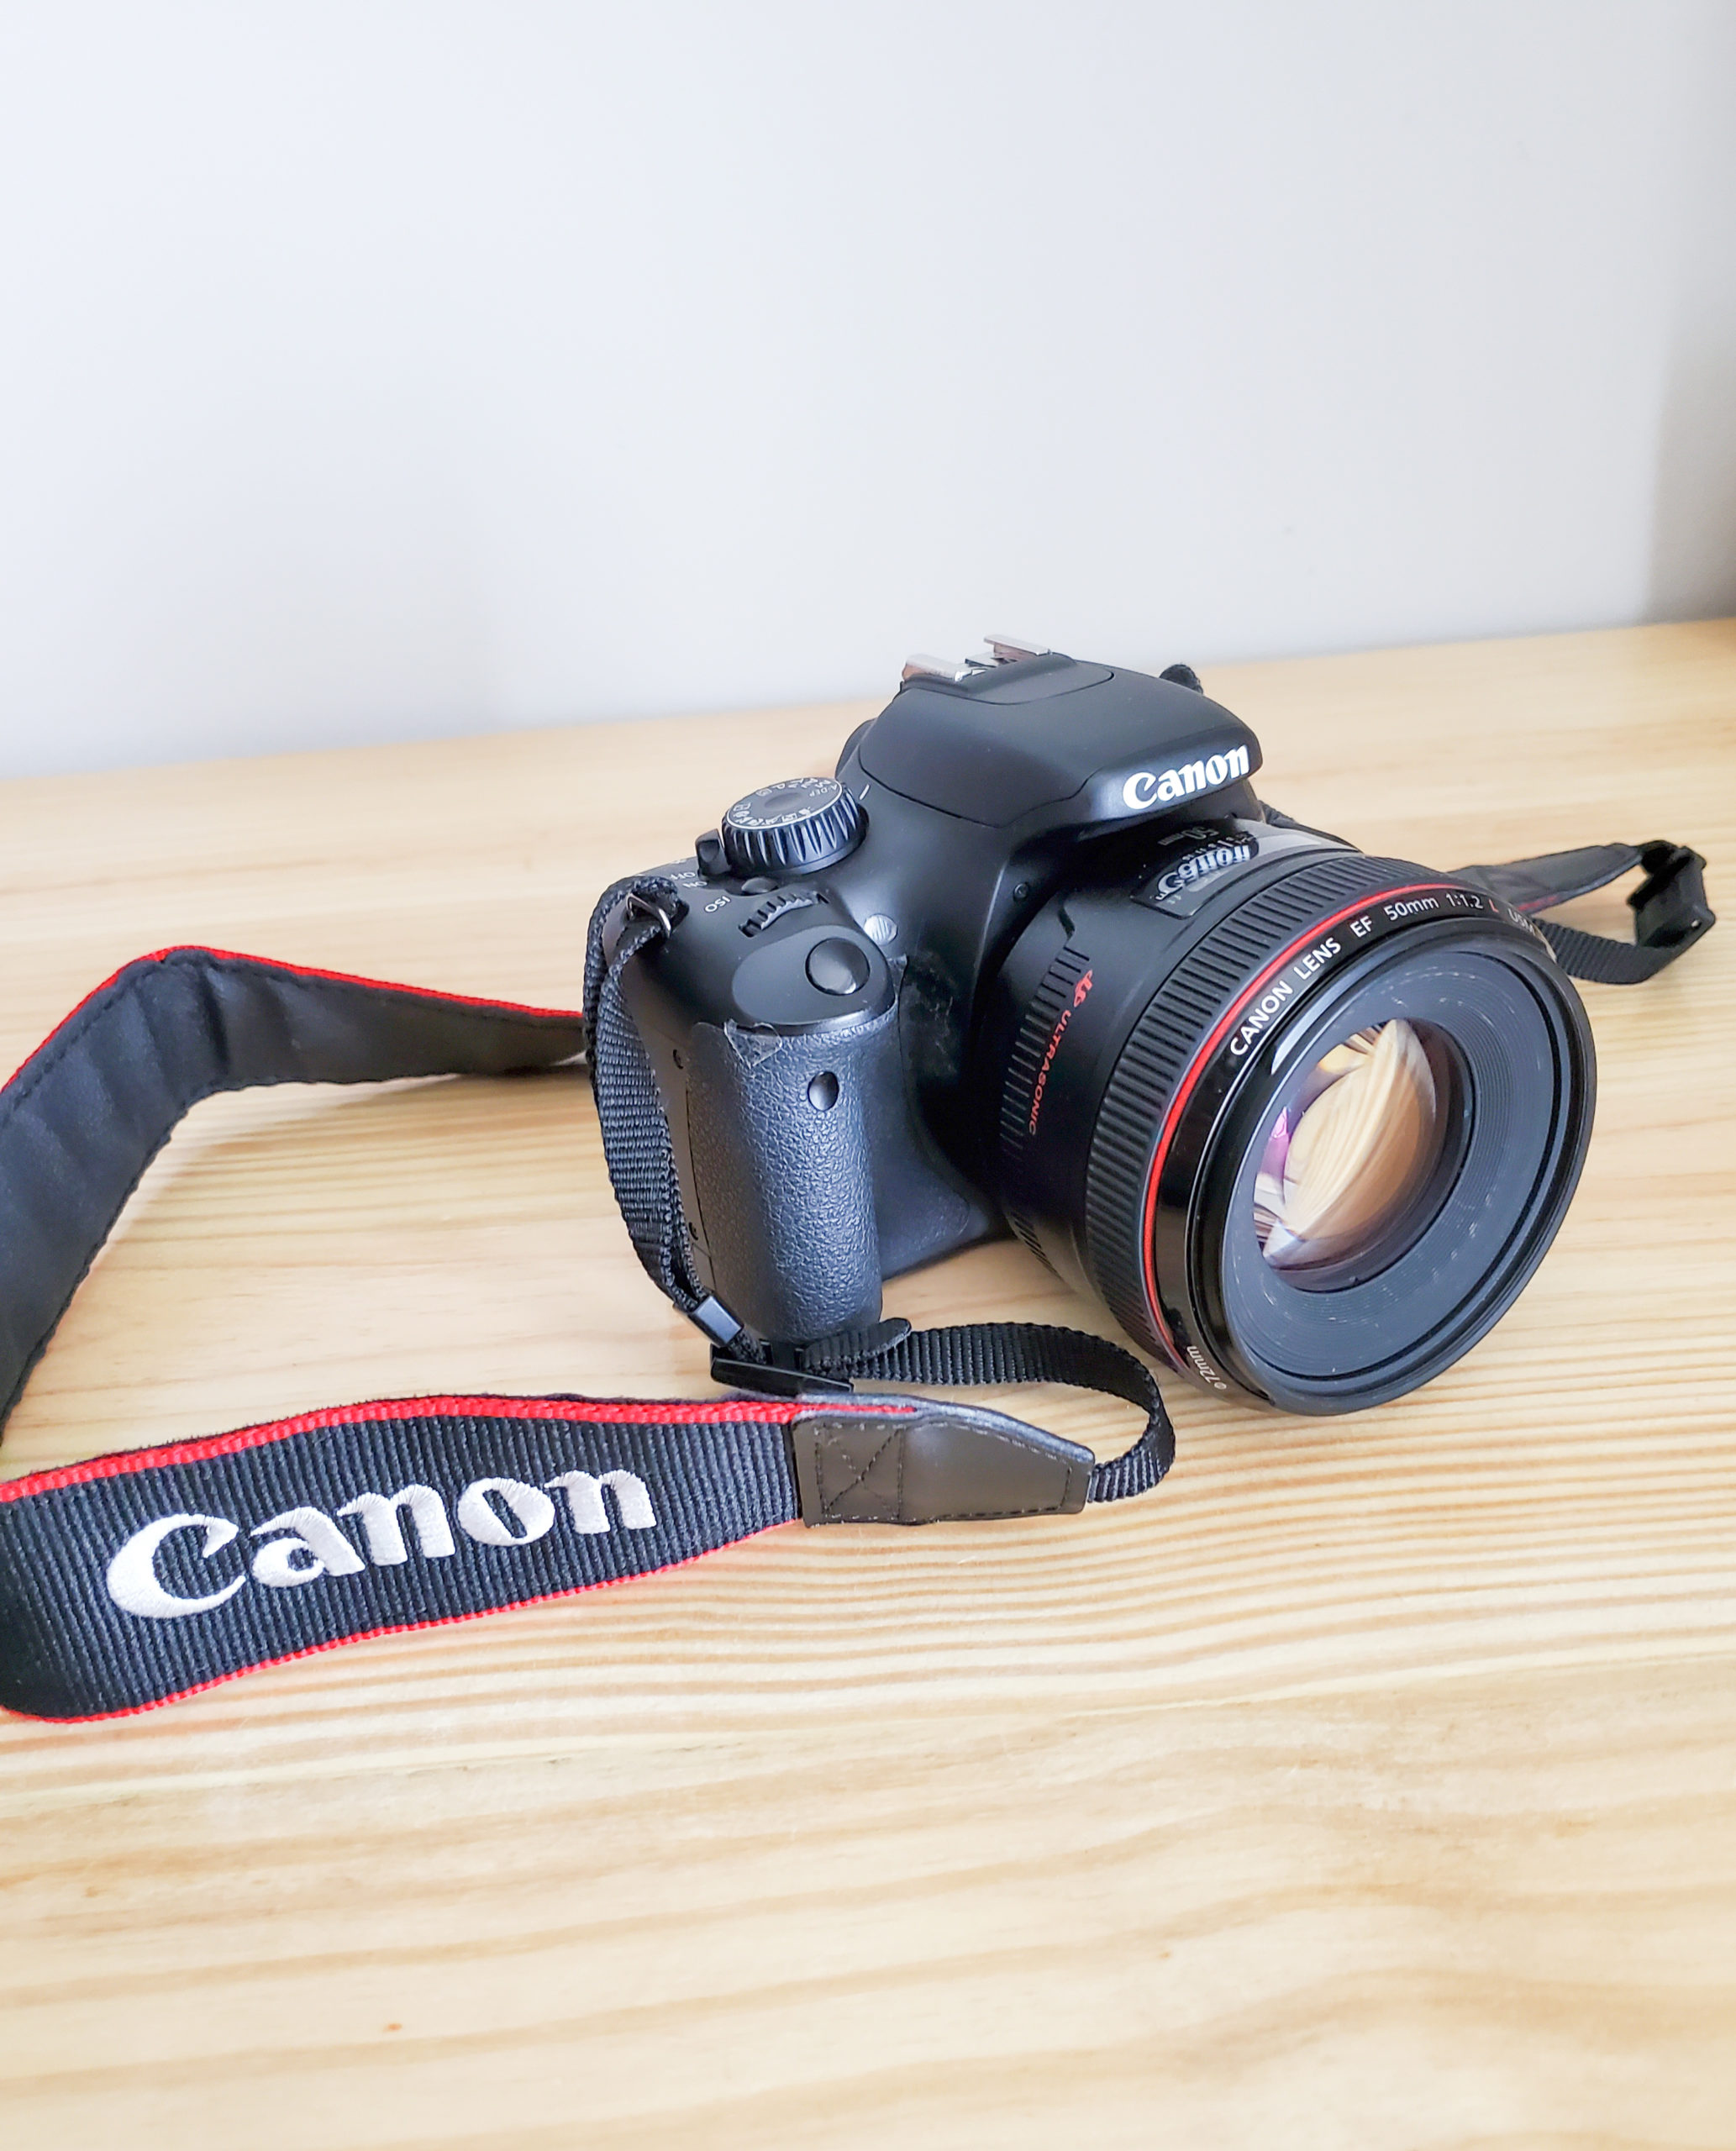 Canon camera for Jenny Macy Photography Photo Sessions